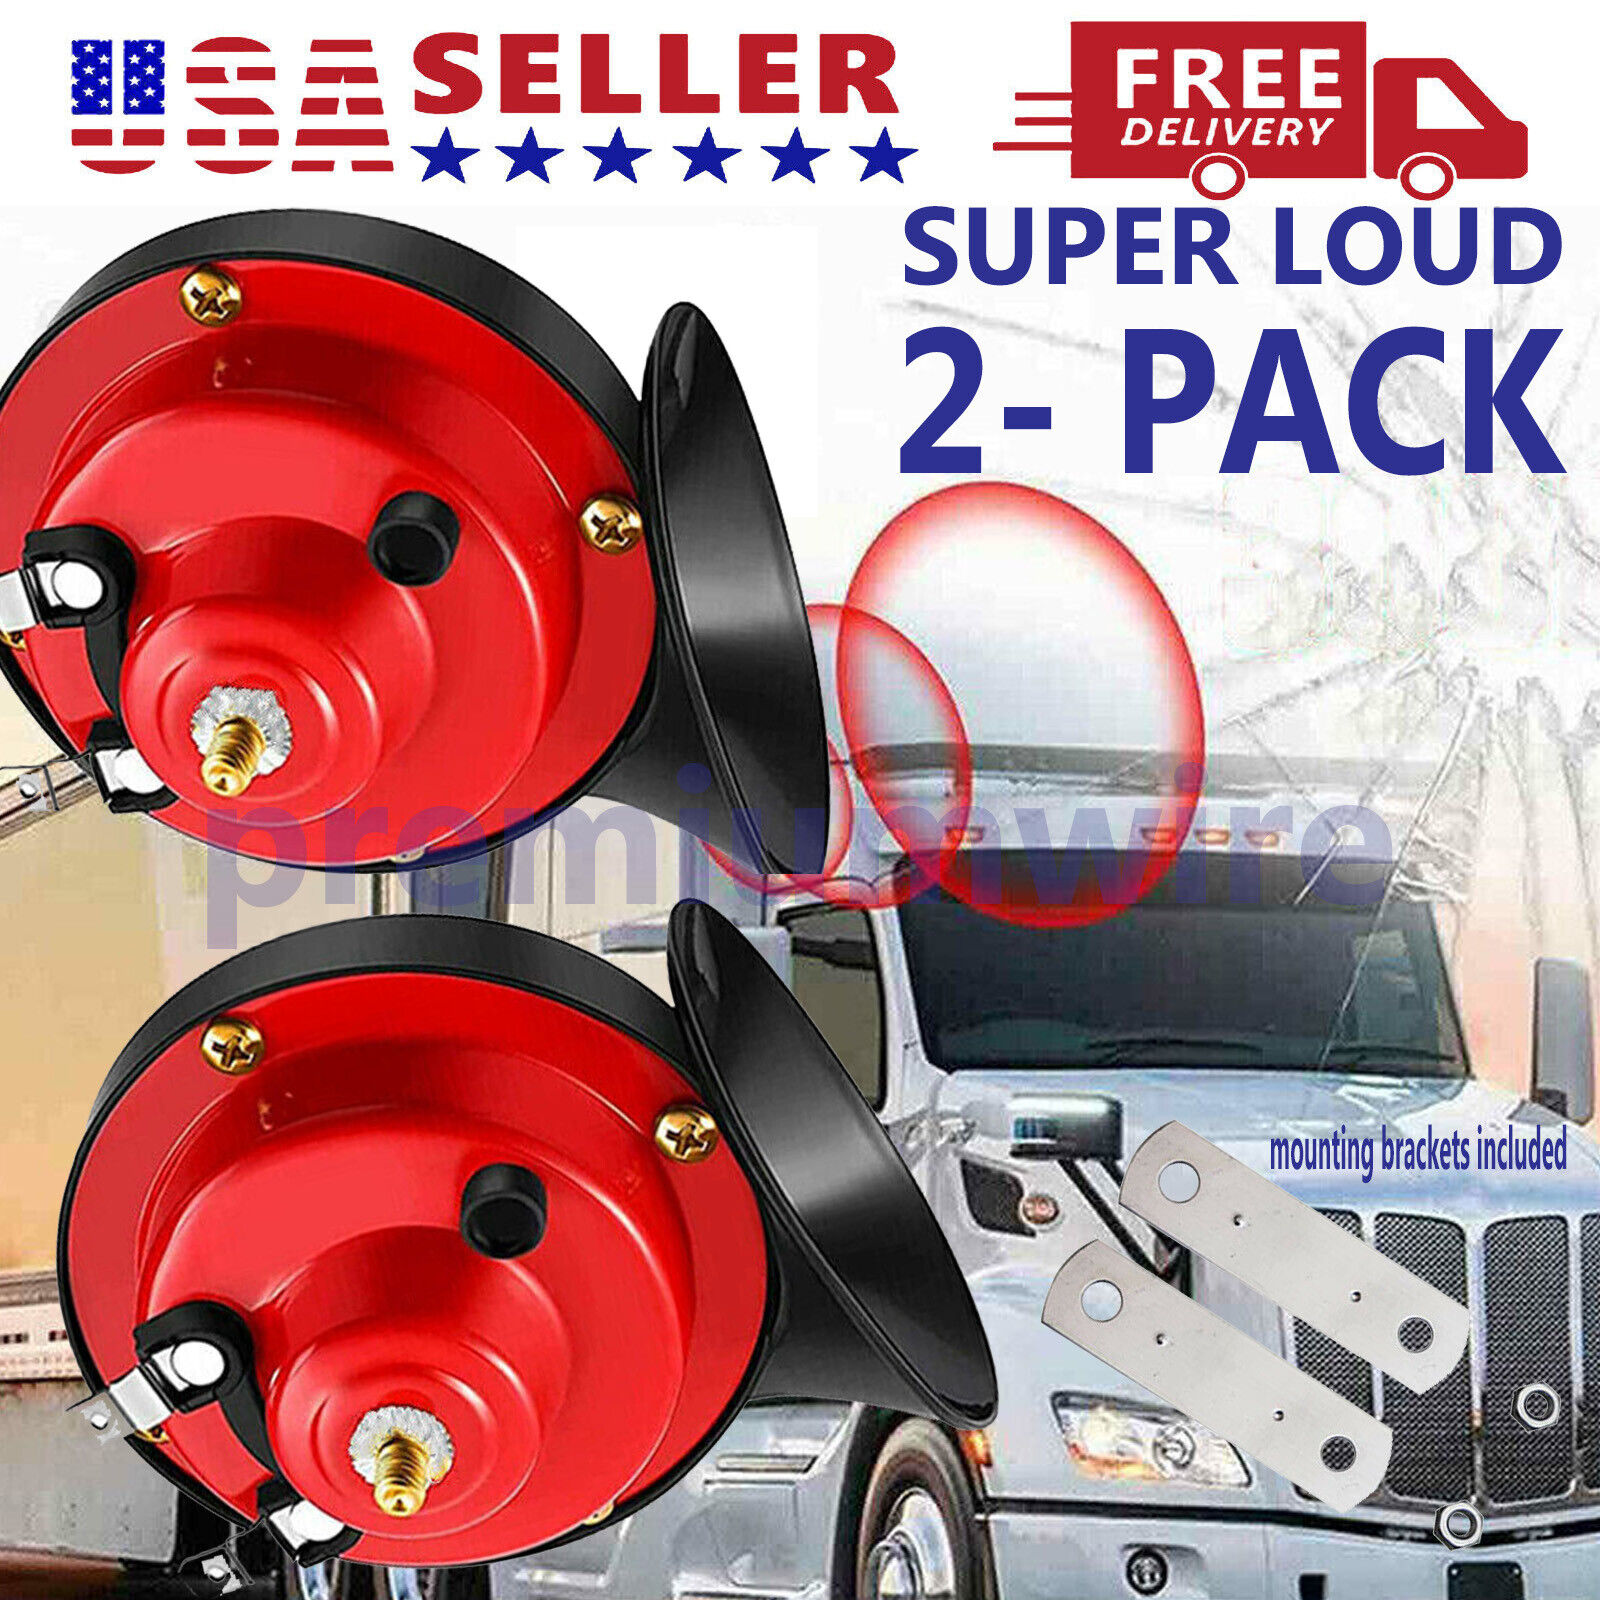 2x 12V Super Loud Train Horn Waterproof Motorcycle Car Truck SUV Boat Red